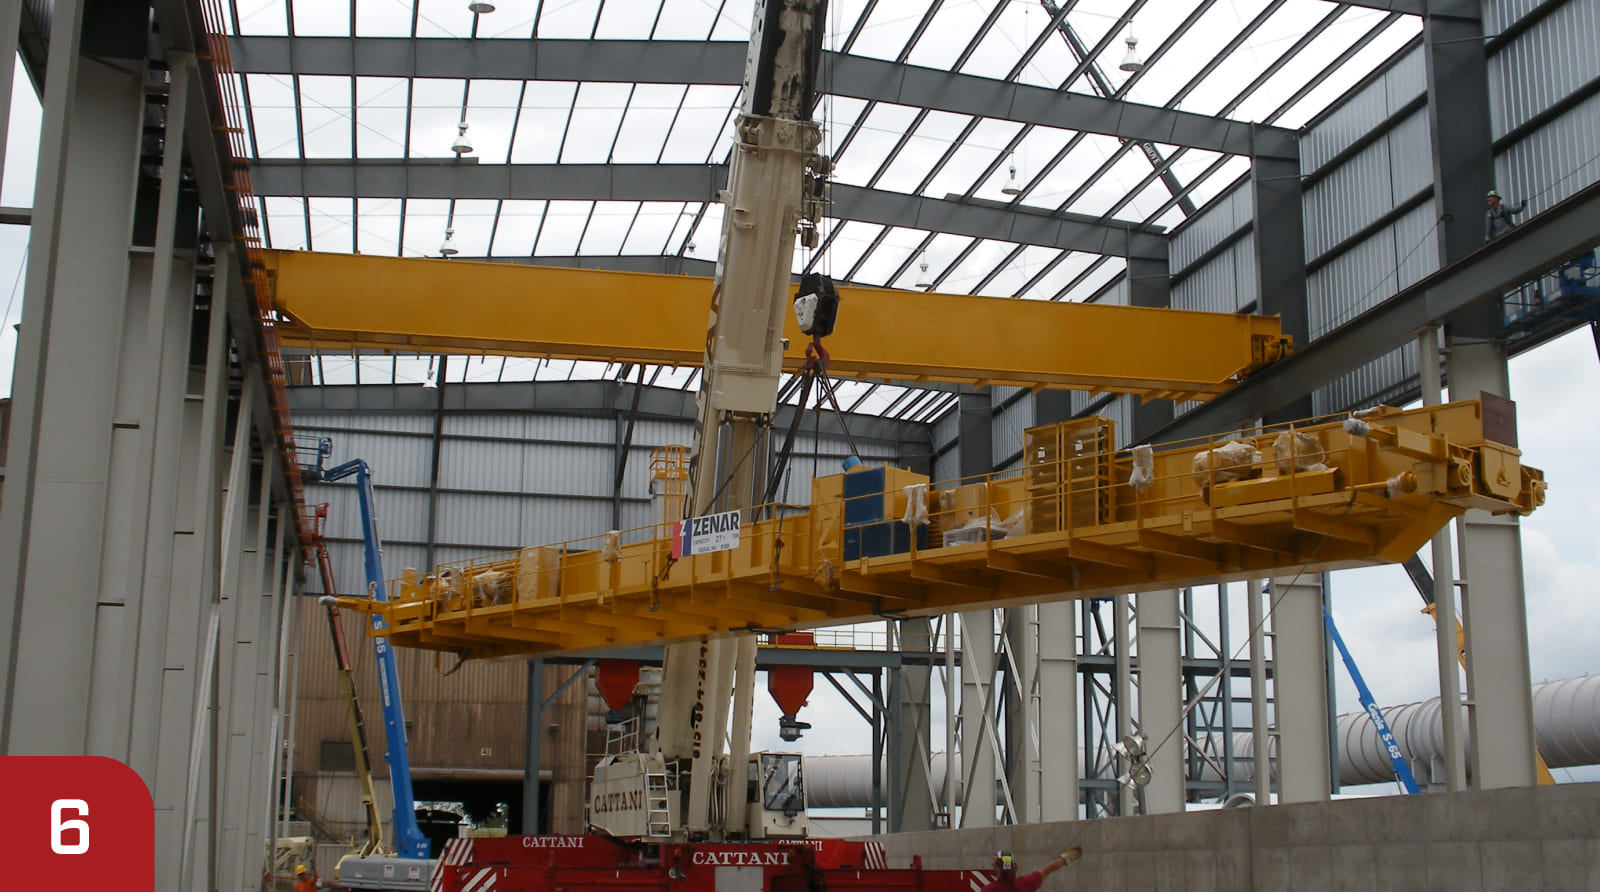 Zenar overhead crane being assembled and installed